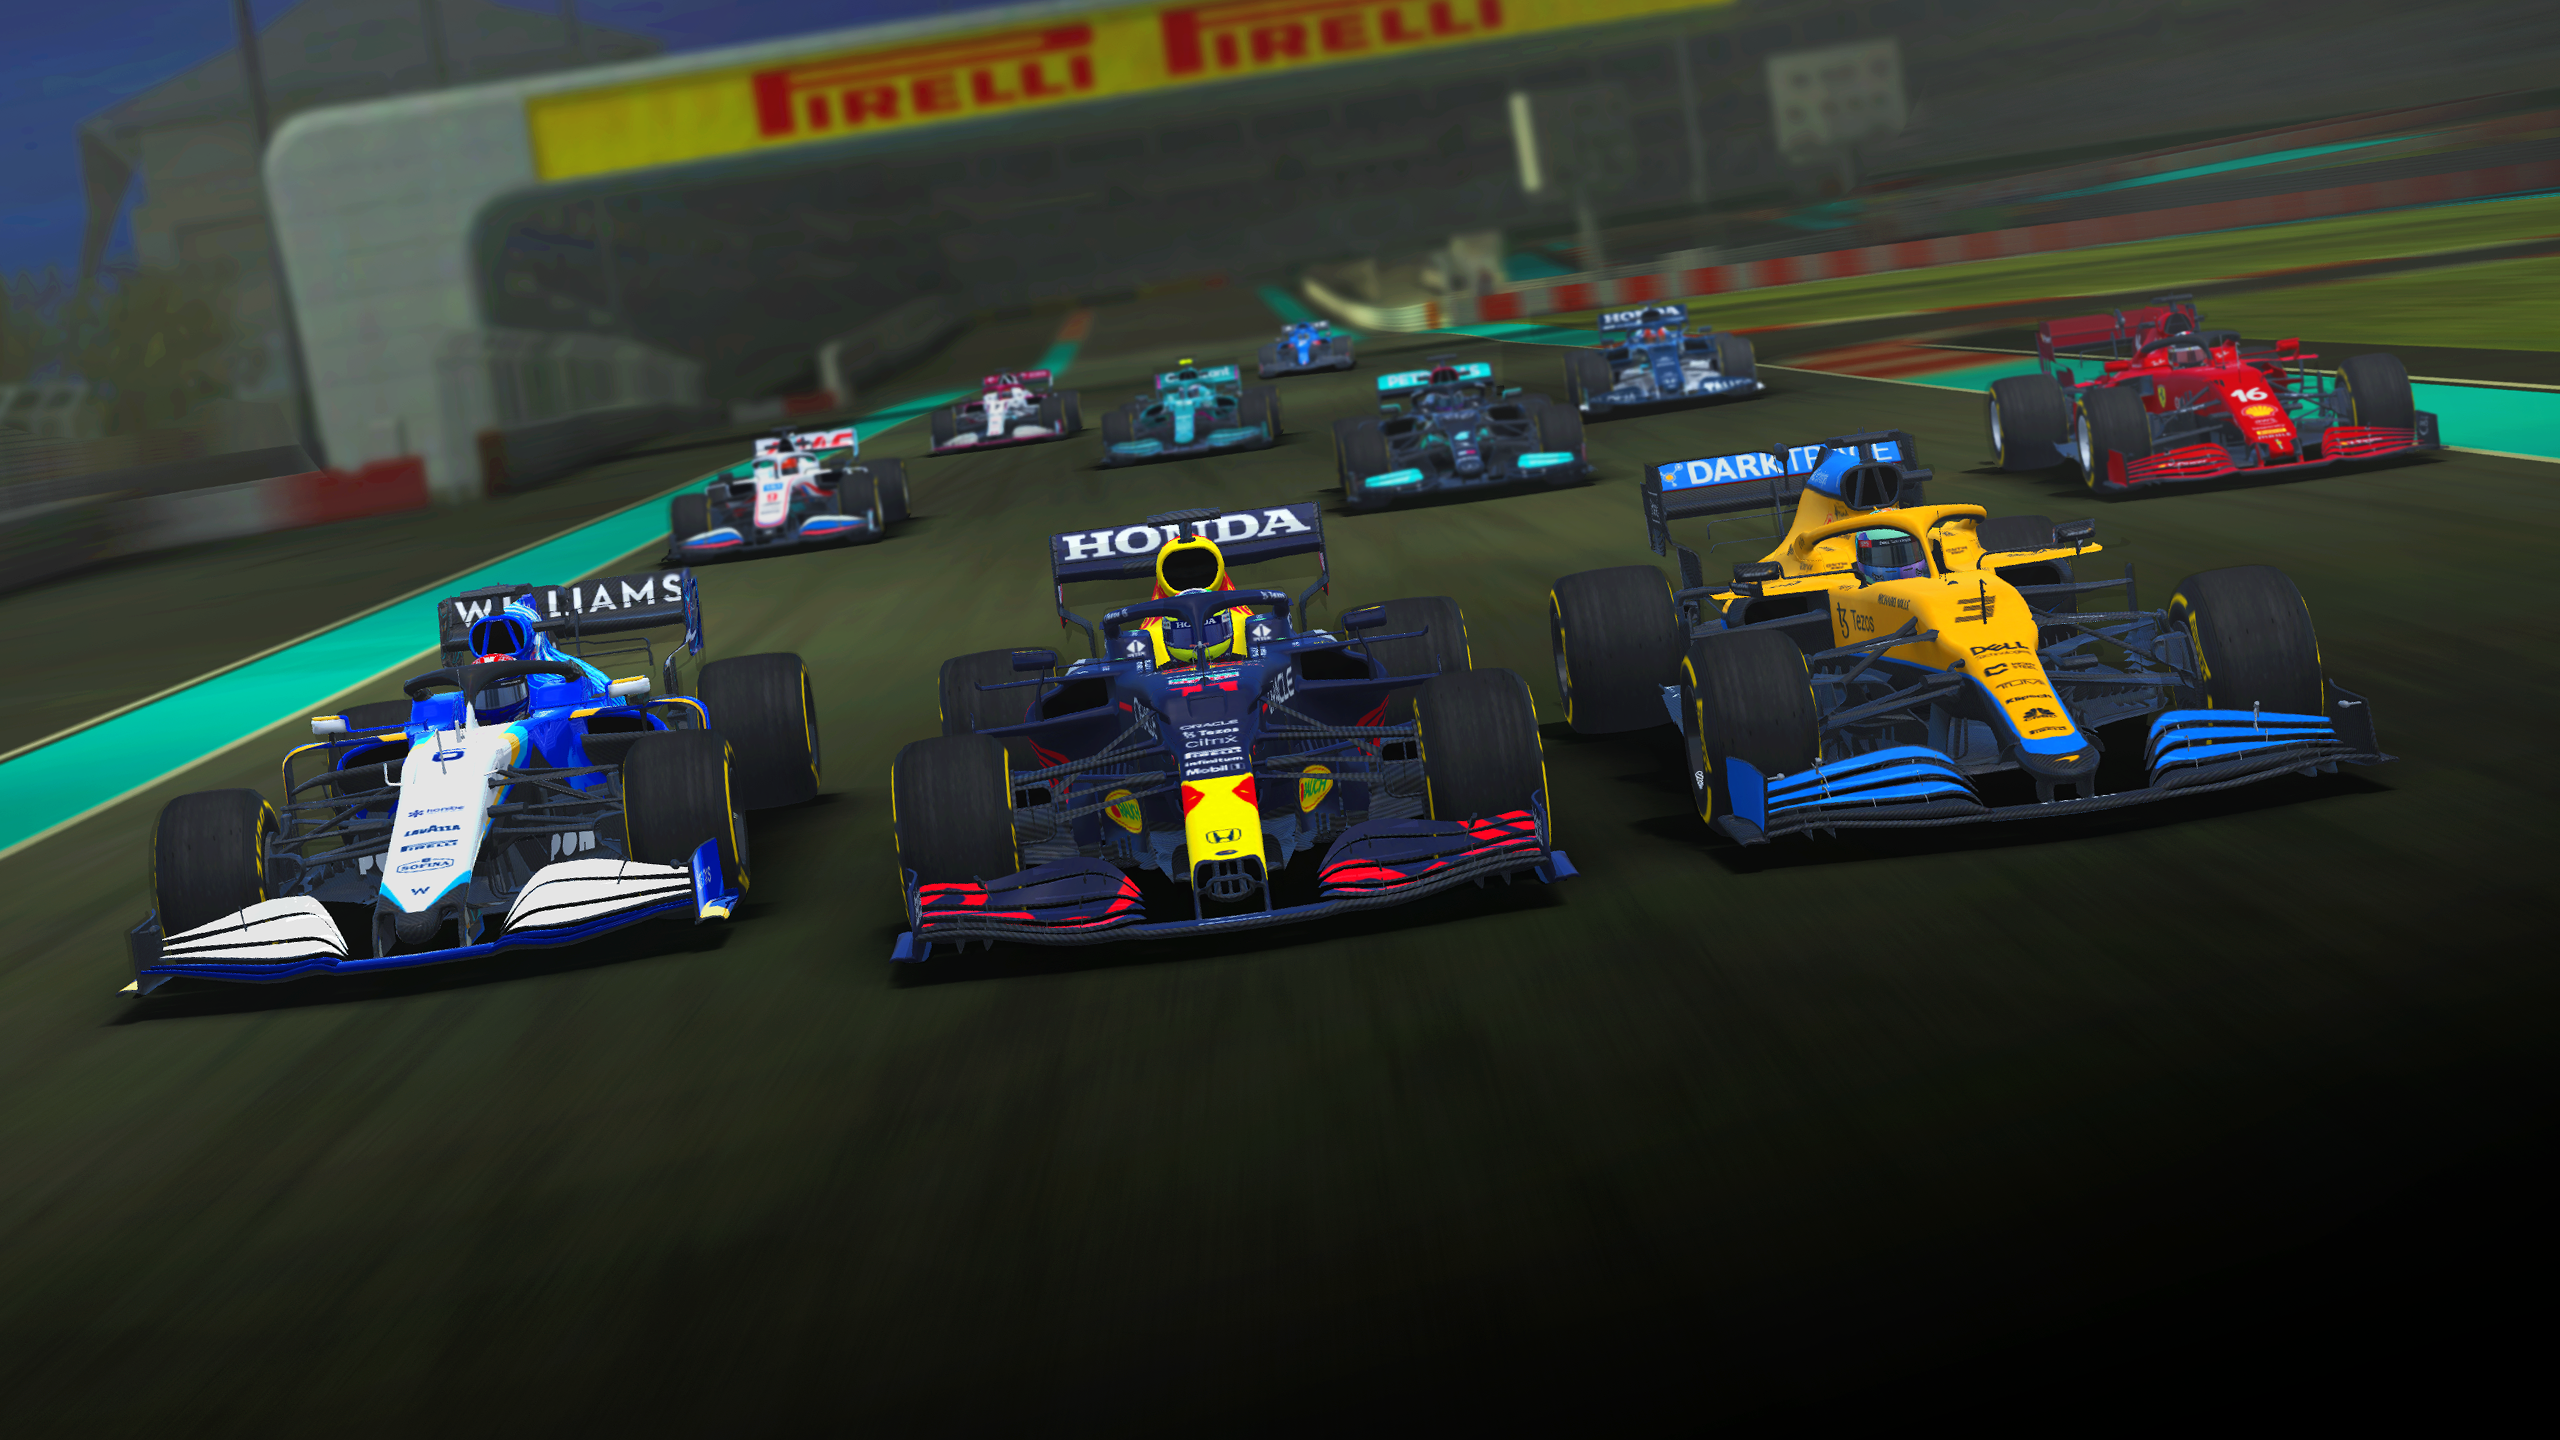 Real Racing 3 Mod Apk free download